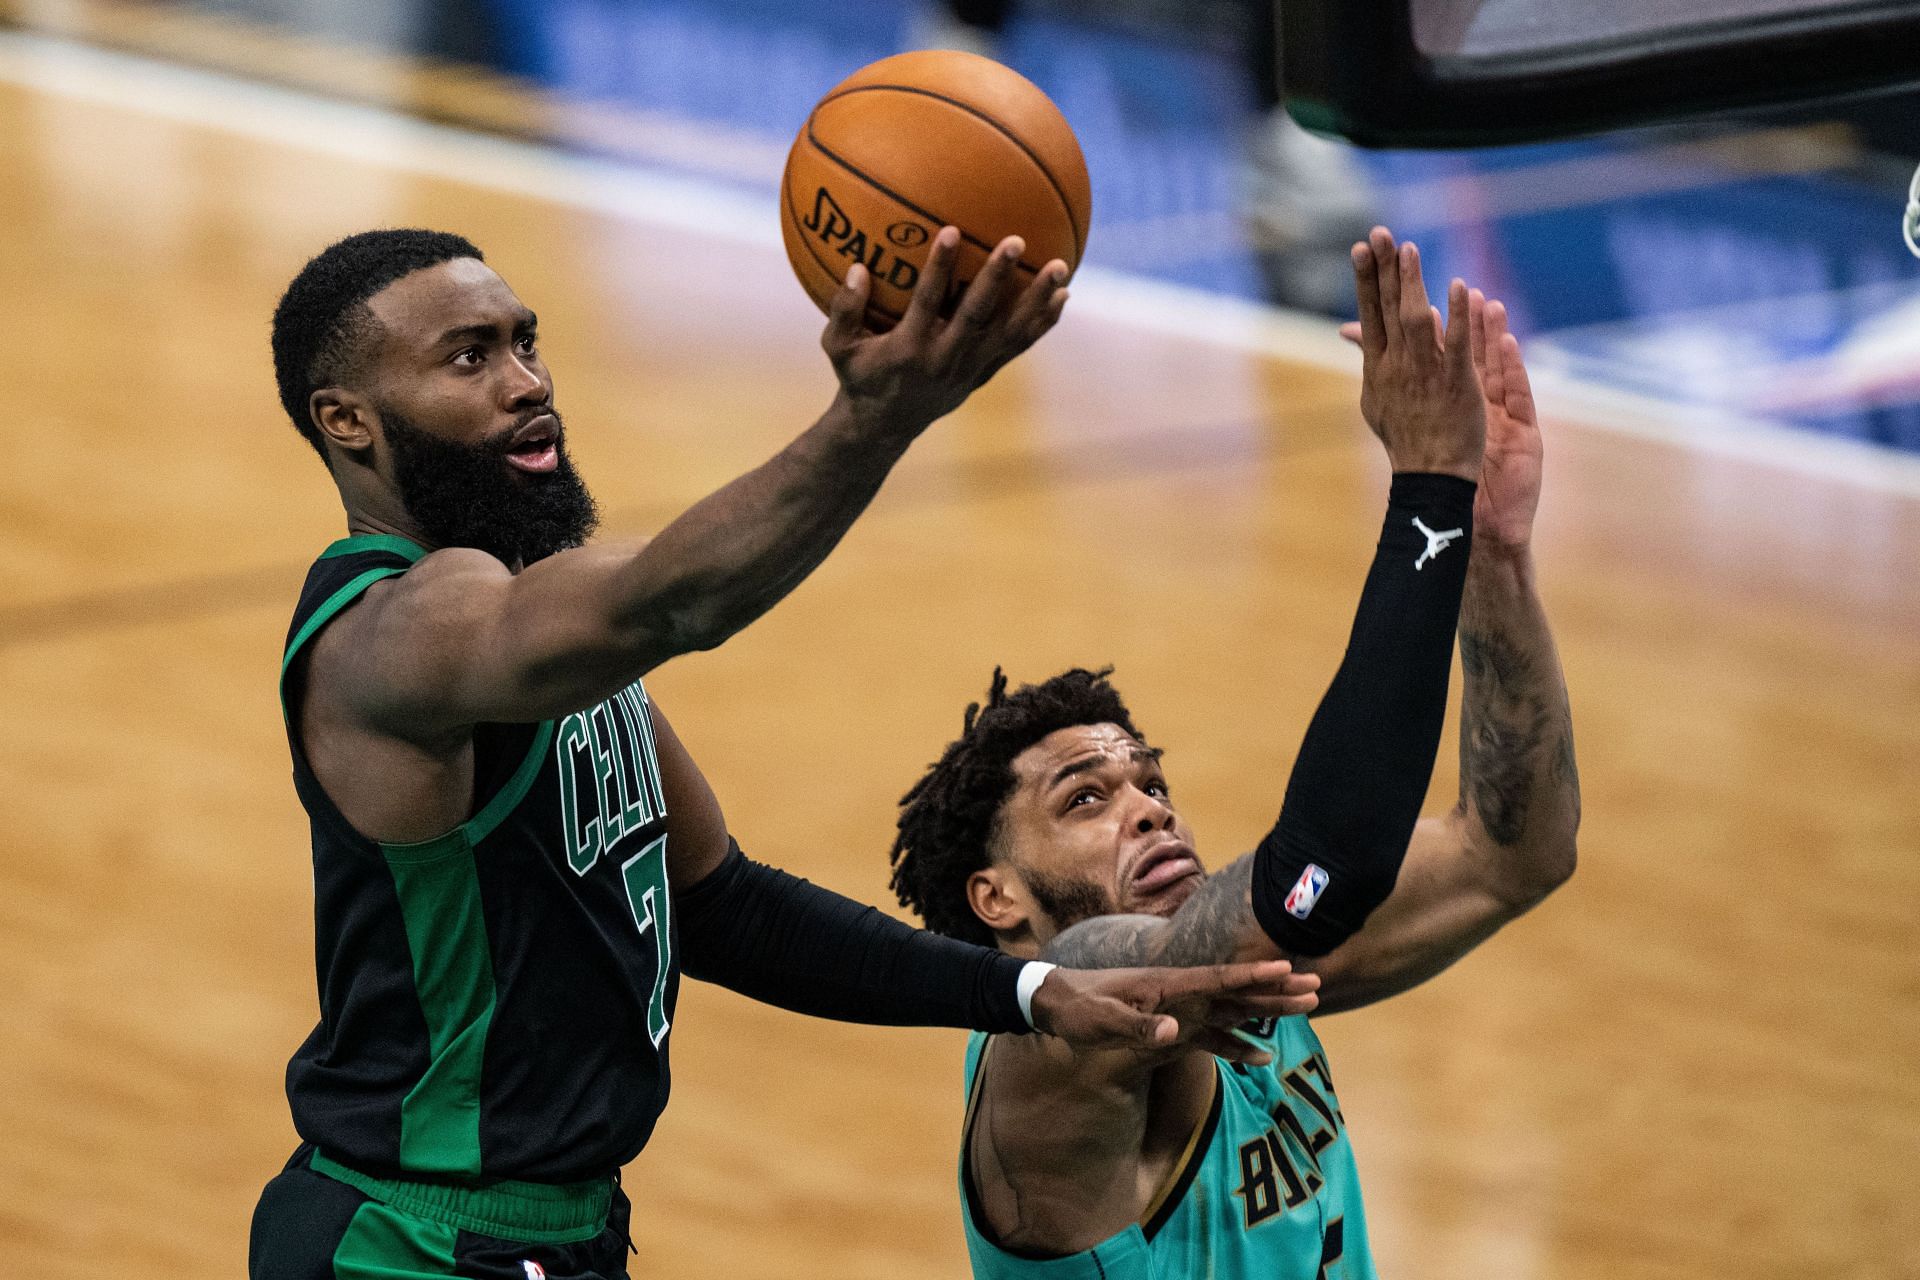 Boston Celtics All-Star Jaylen Brown taking a layup